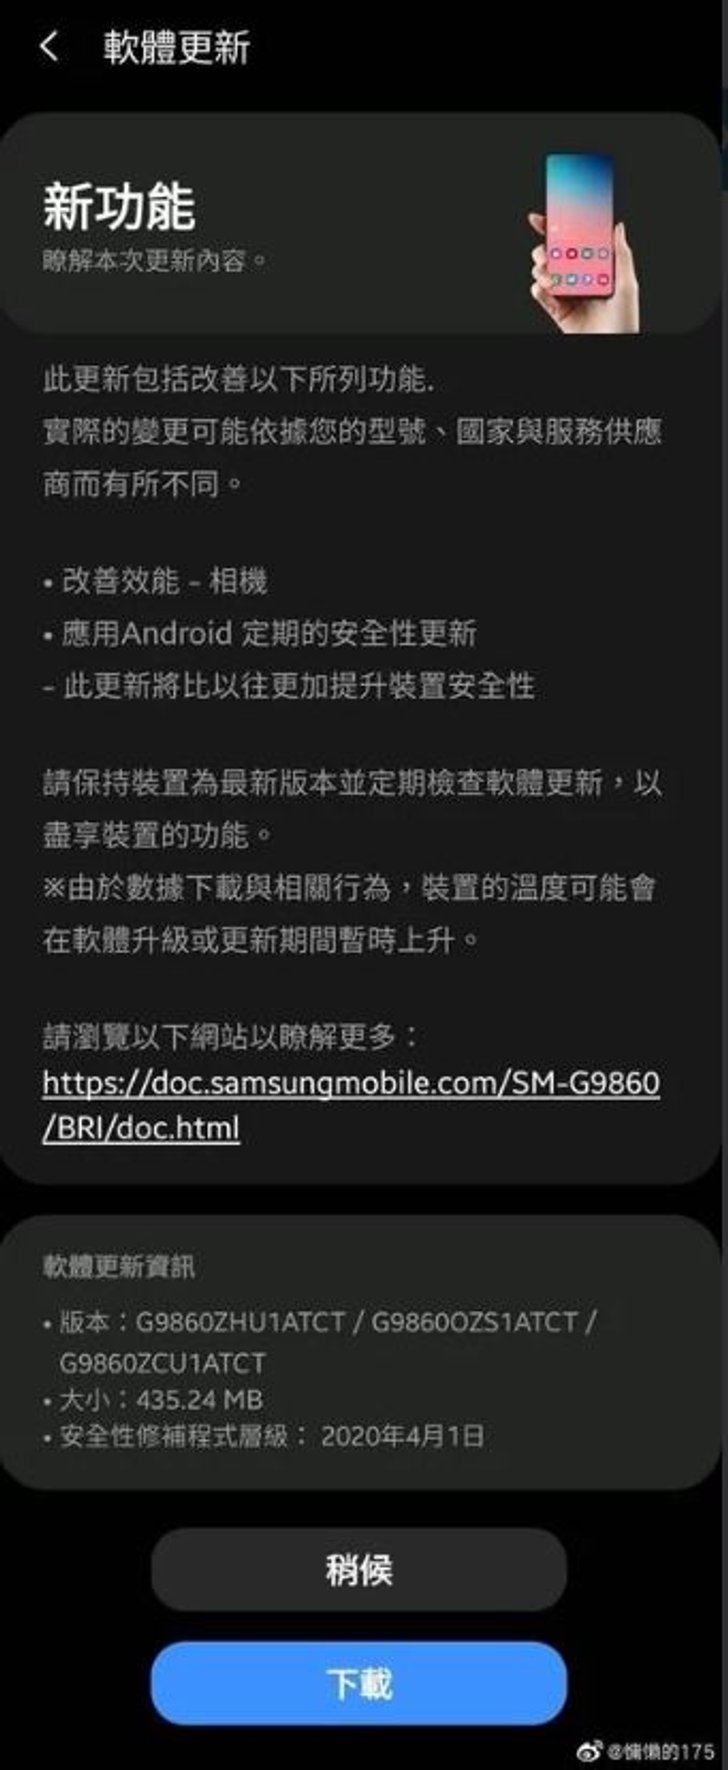 Samsung Galaxy S20 Series